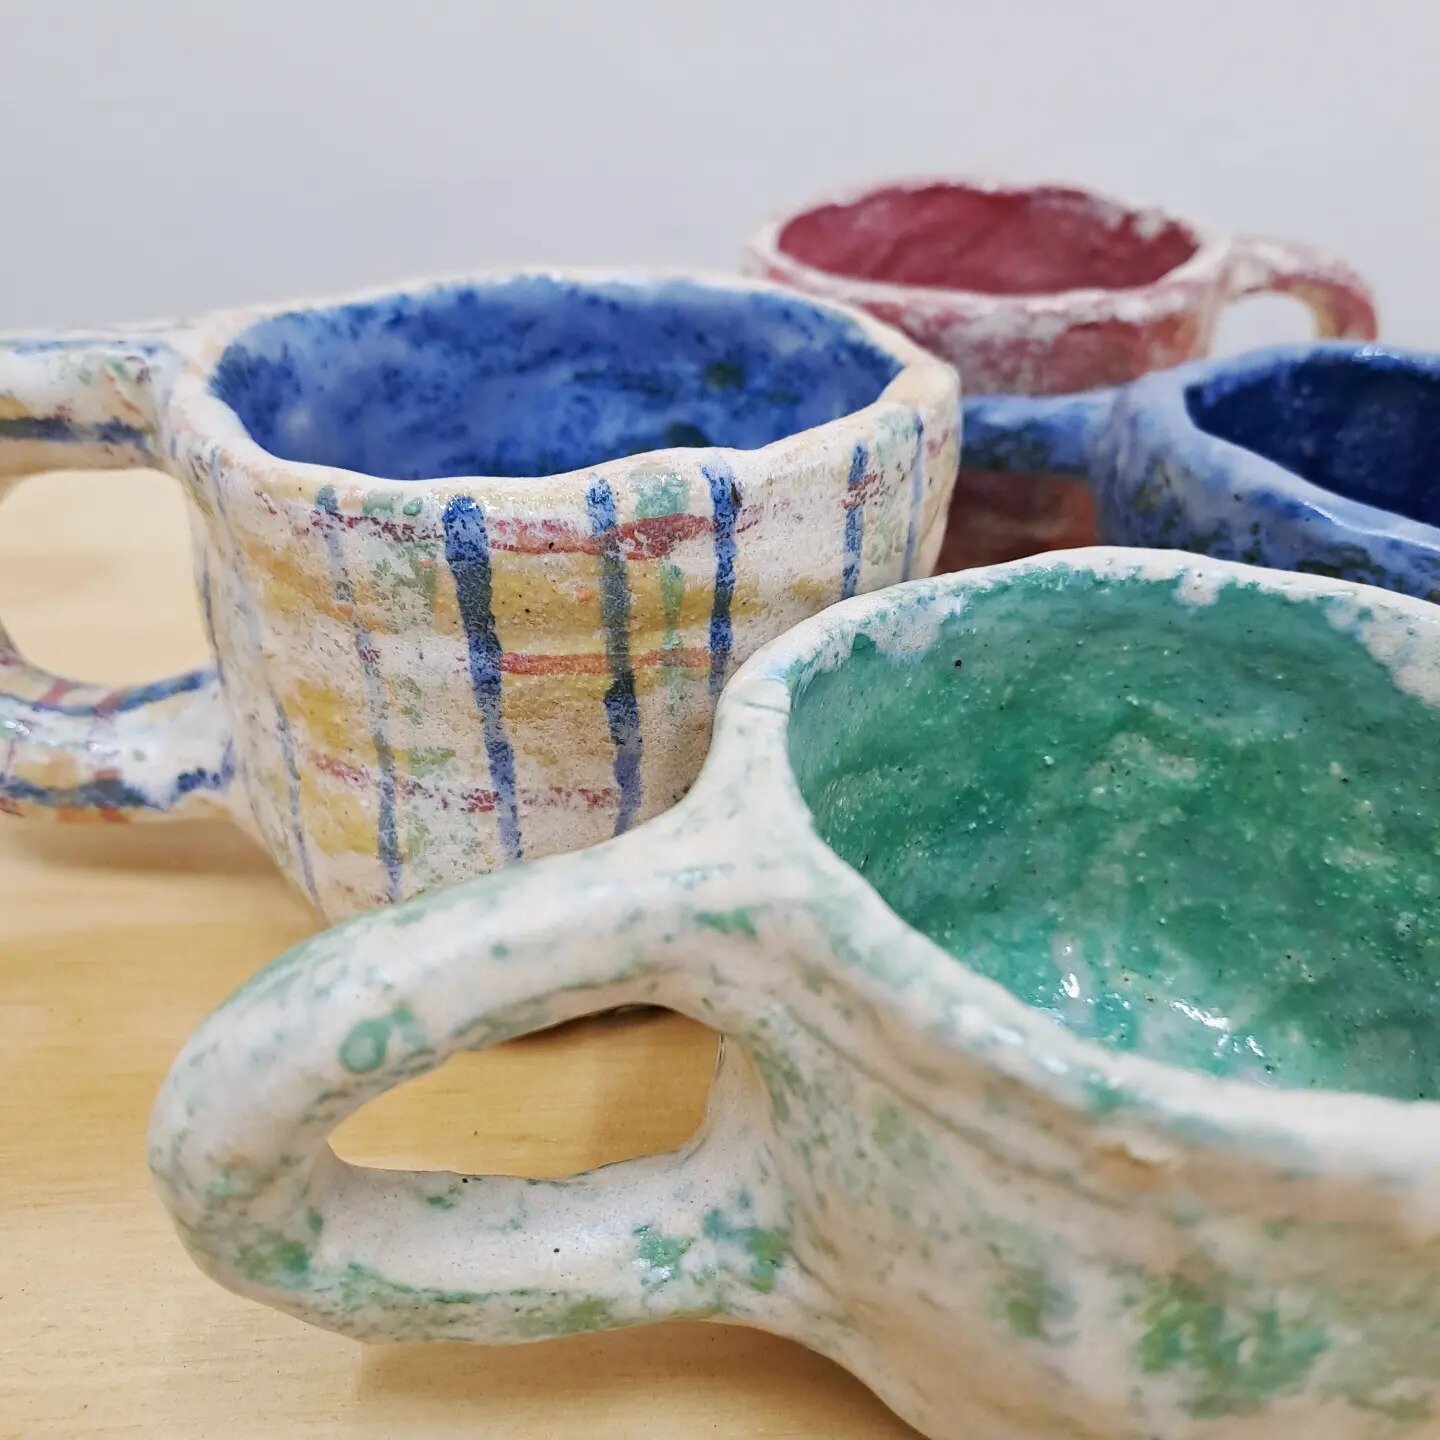 More pottery!

#potteryglazing #mugs